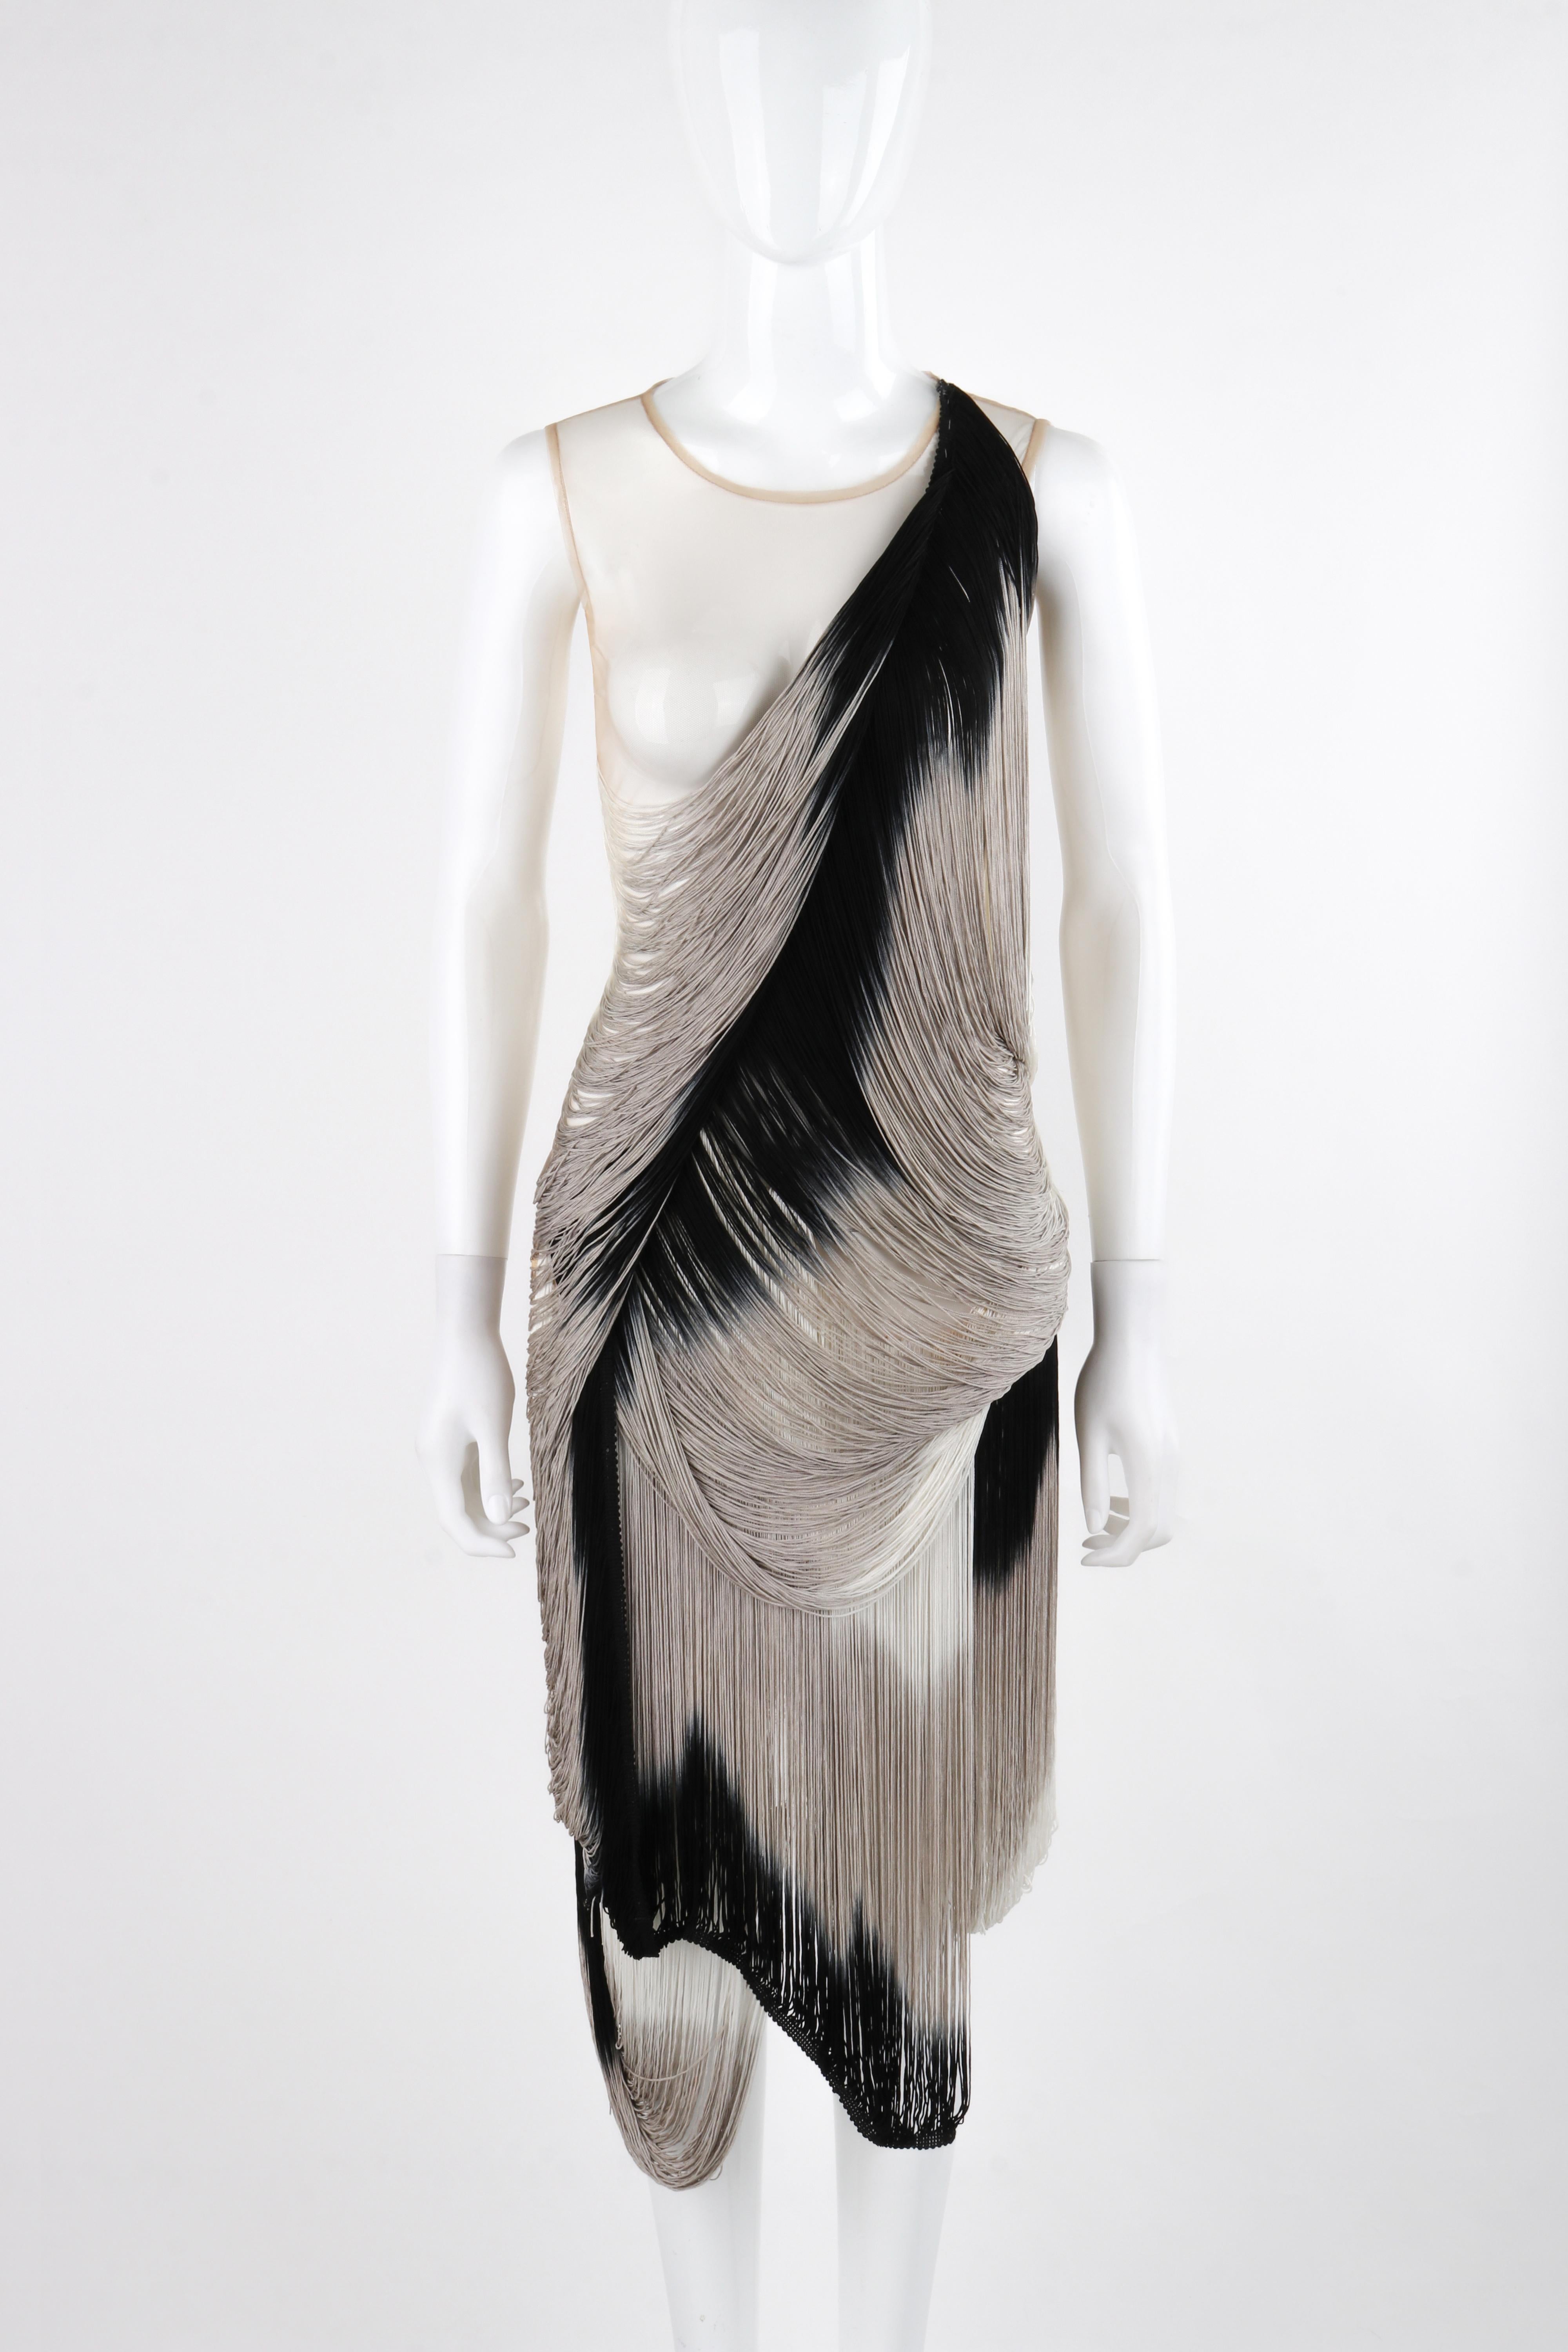 ALEXANDER McQUEEN S/S 2009 Black Gray Nude Mesh Tassel Fringe Draped Dress

Brand / Manufacturer: Alexander McQueen
Collection: S/S 2009 